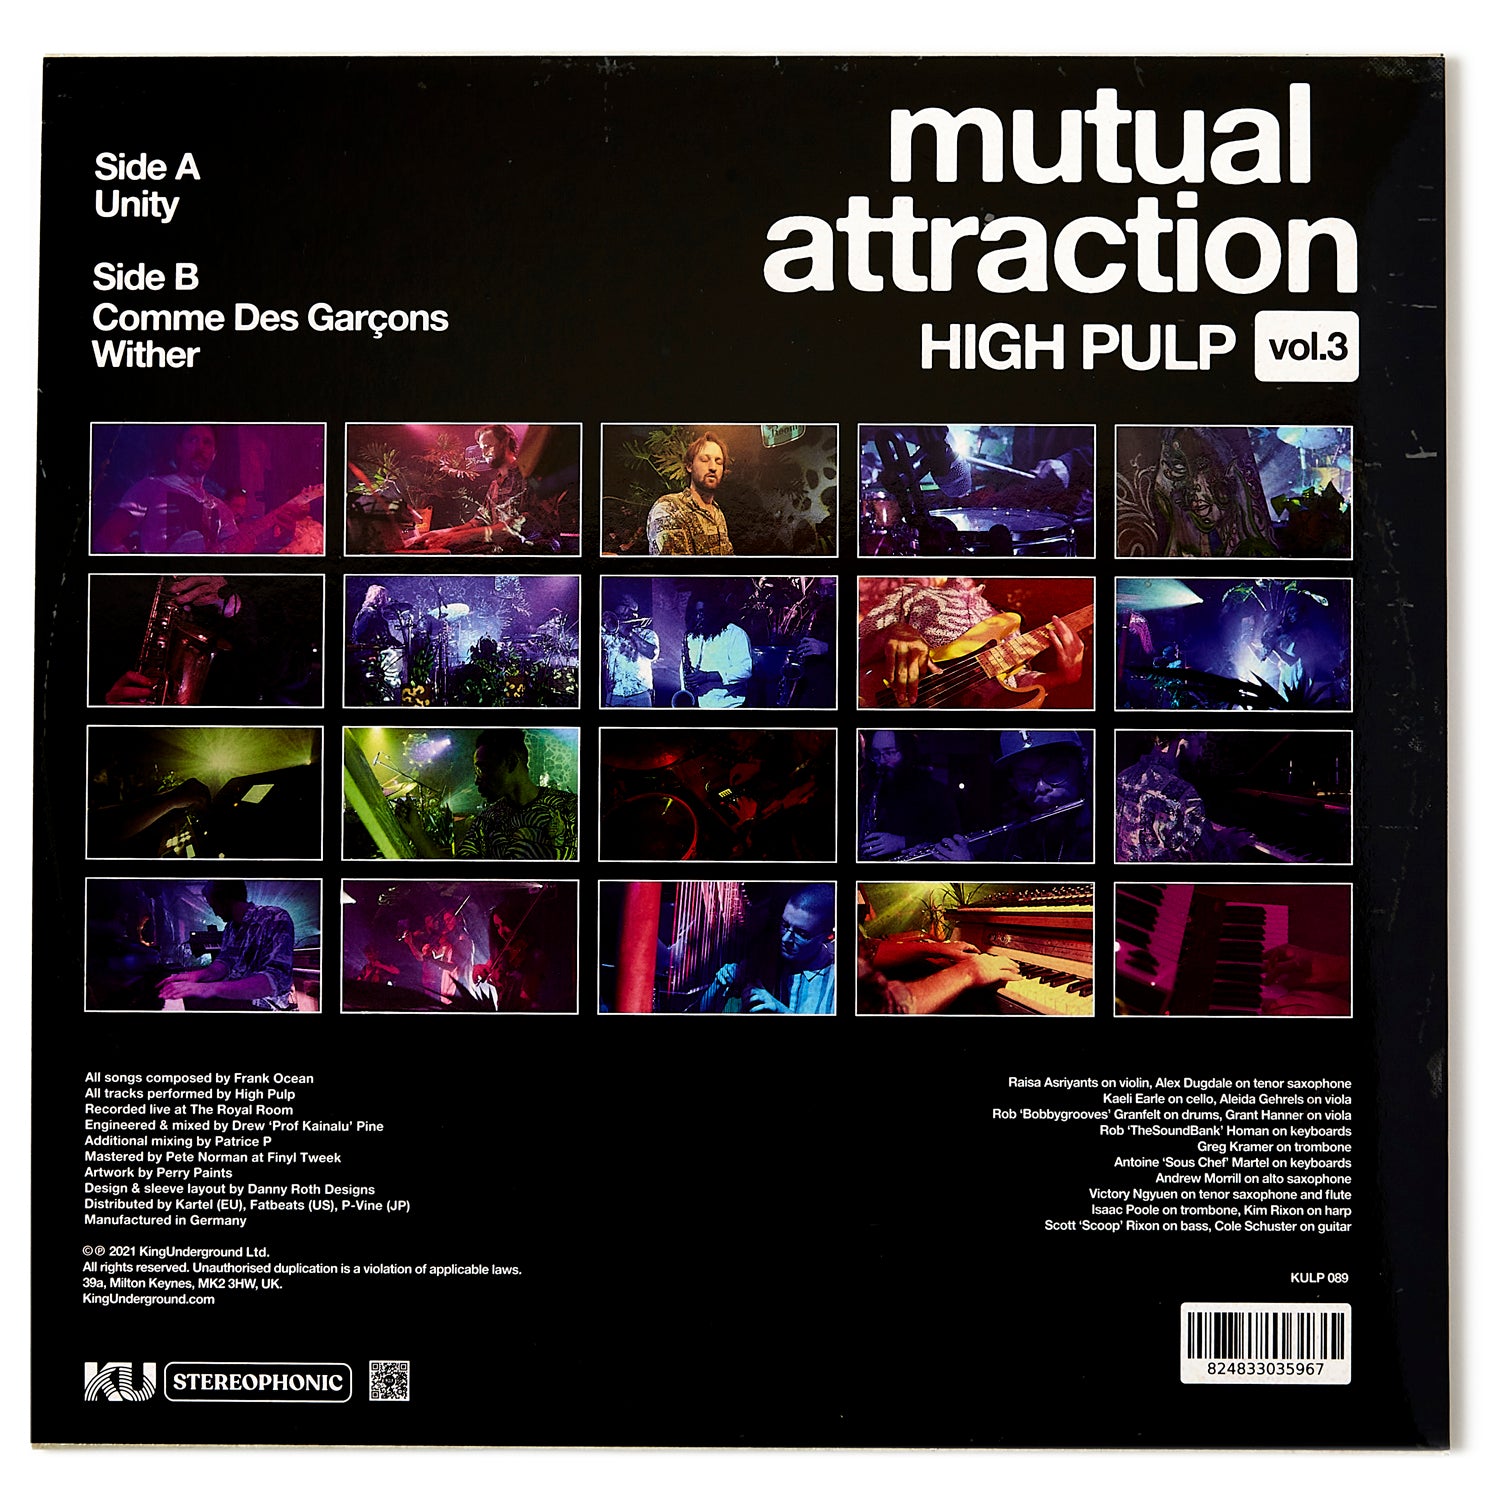 Mutual Attraction Vol. 3 on Vinyl